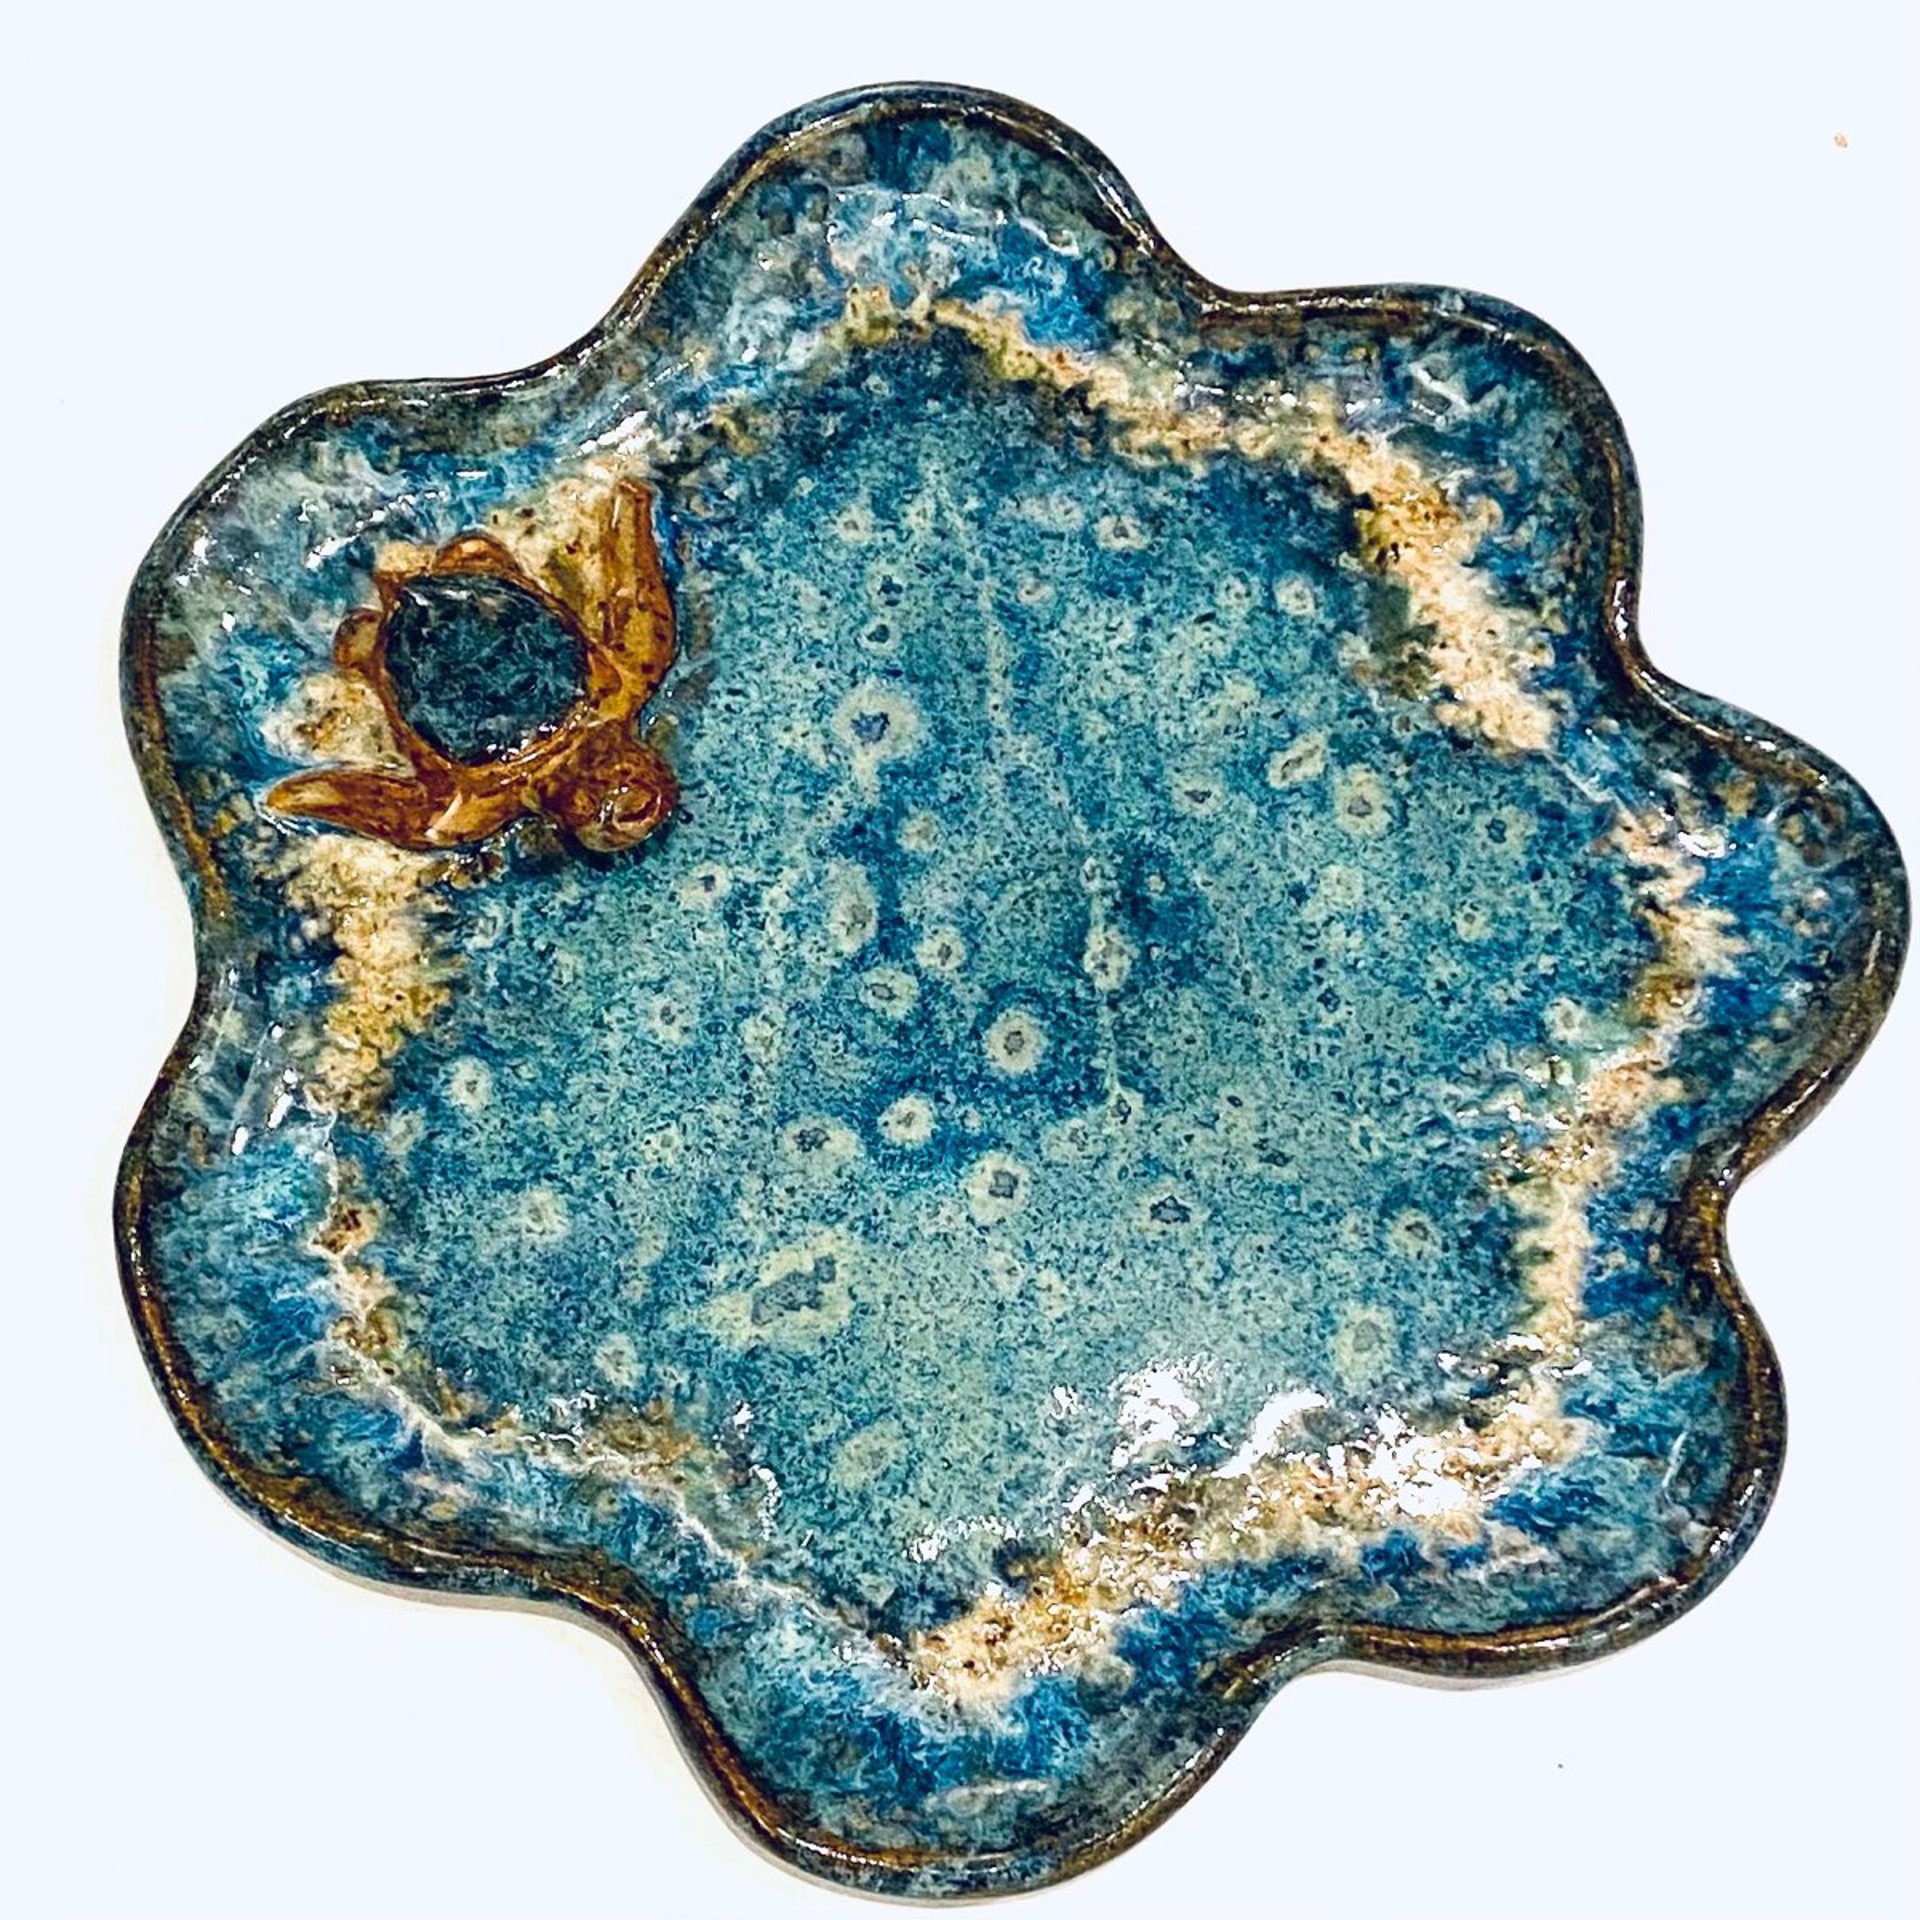 Logan22-842    Small Plate with Turtle (Blue Glaze) by Jim & Steffi Logan